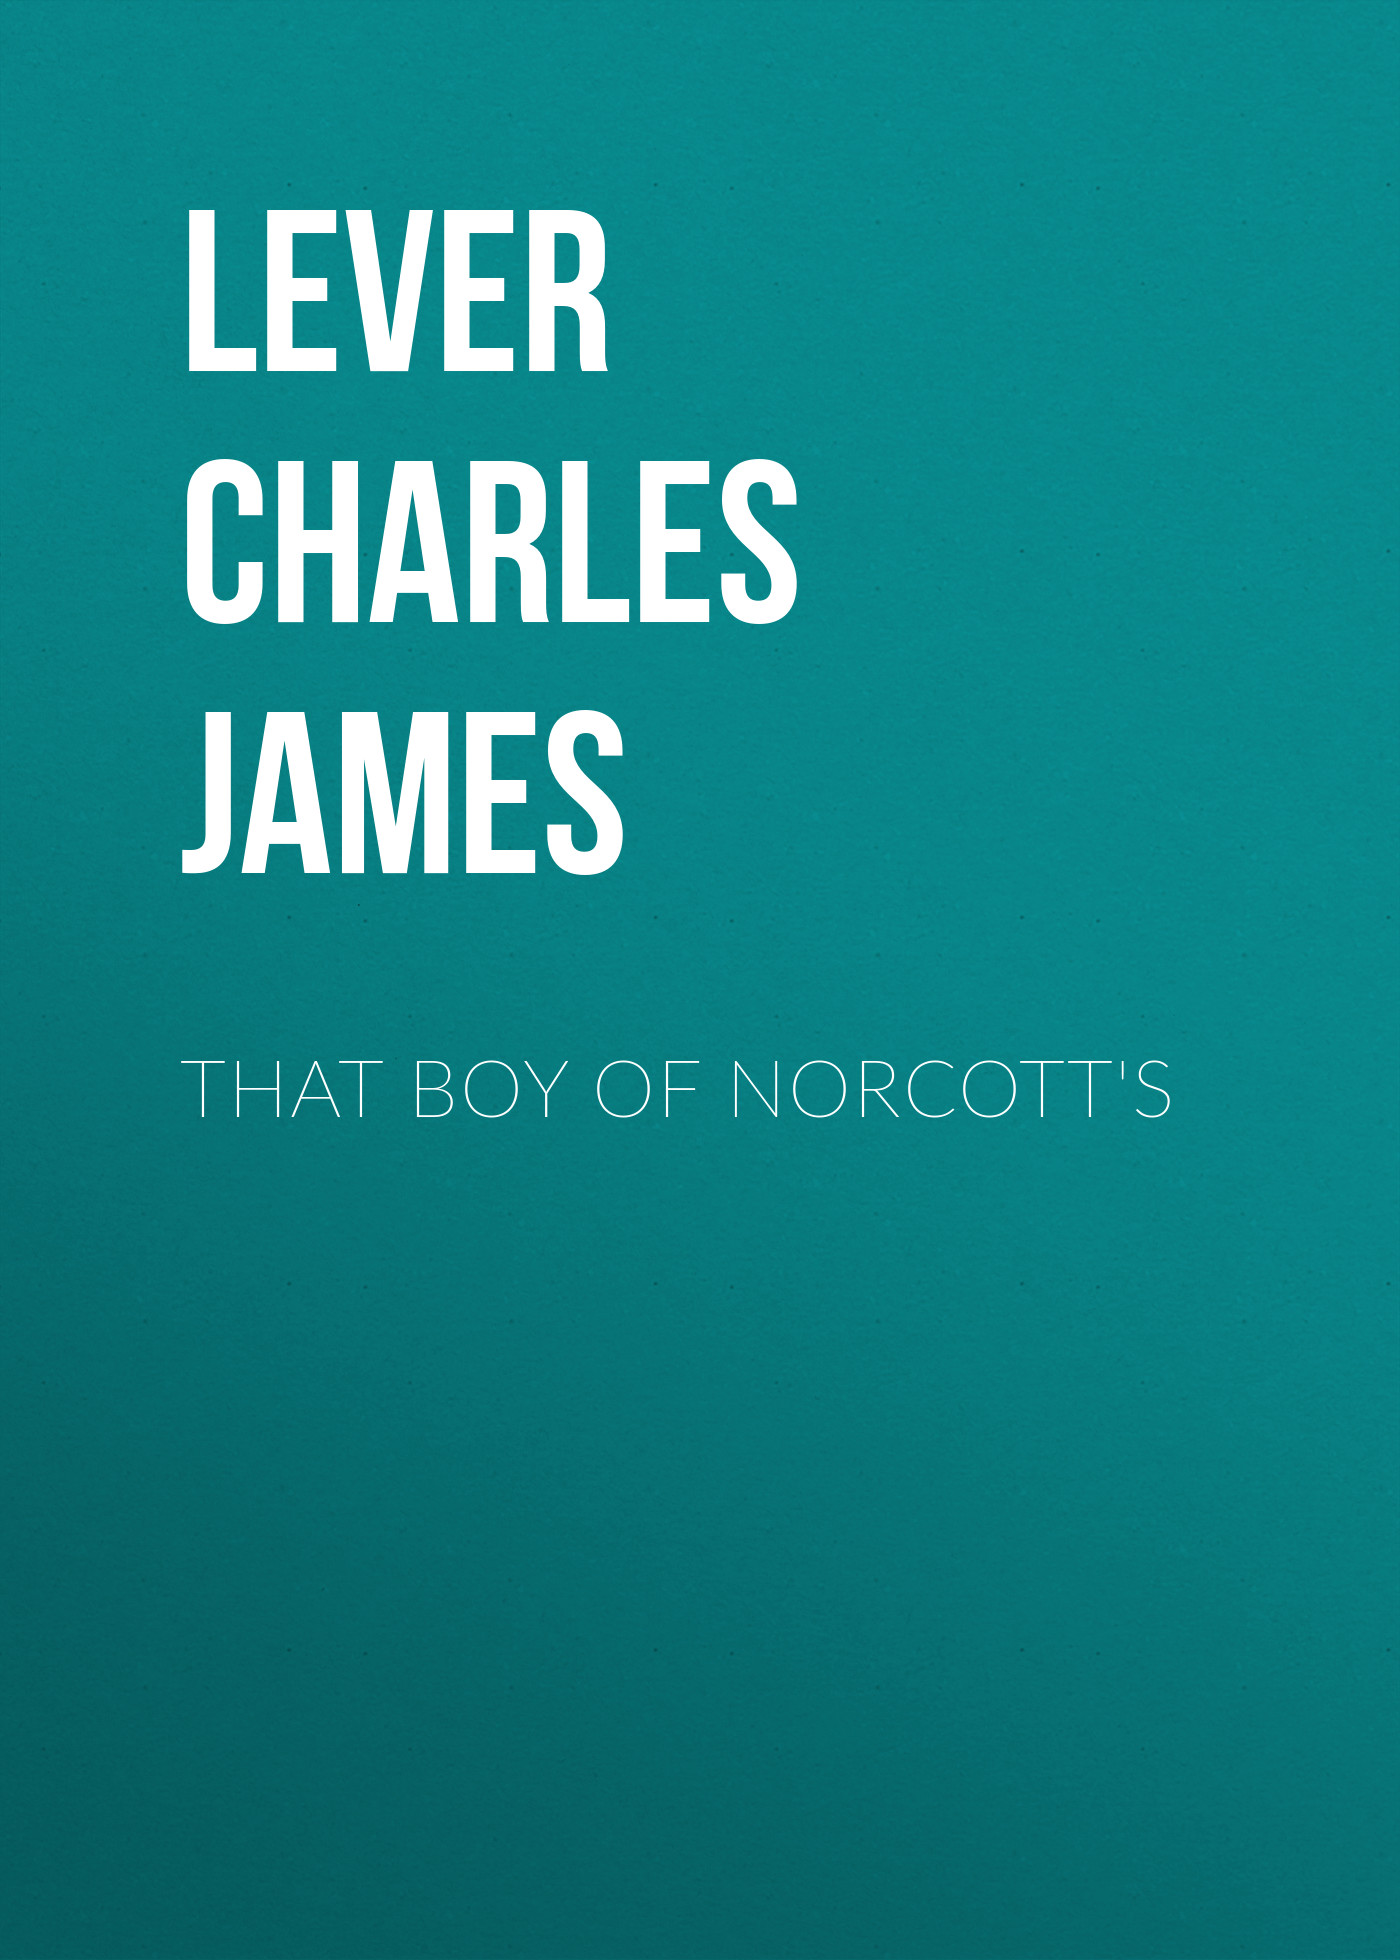 That Boy Of Norcott's